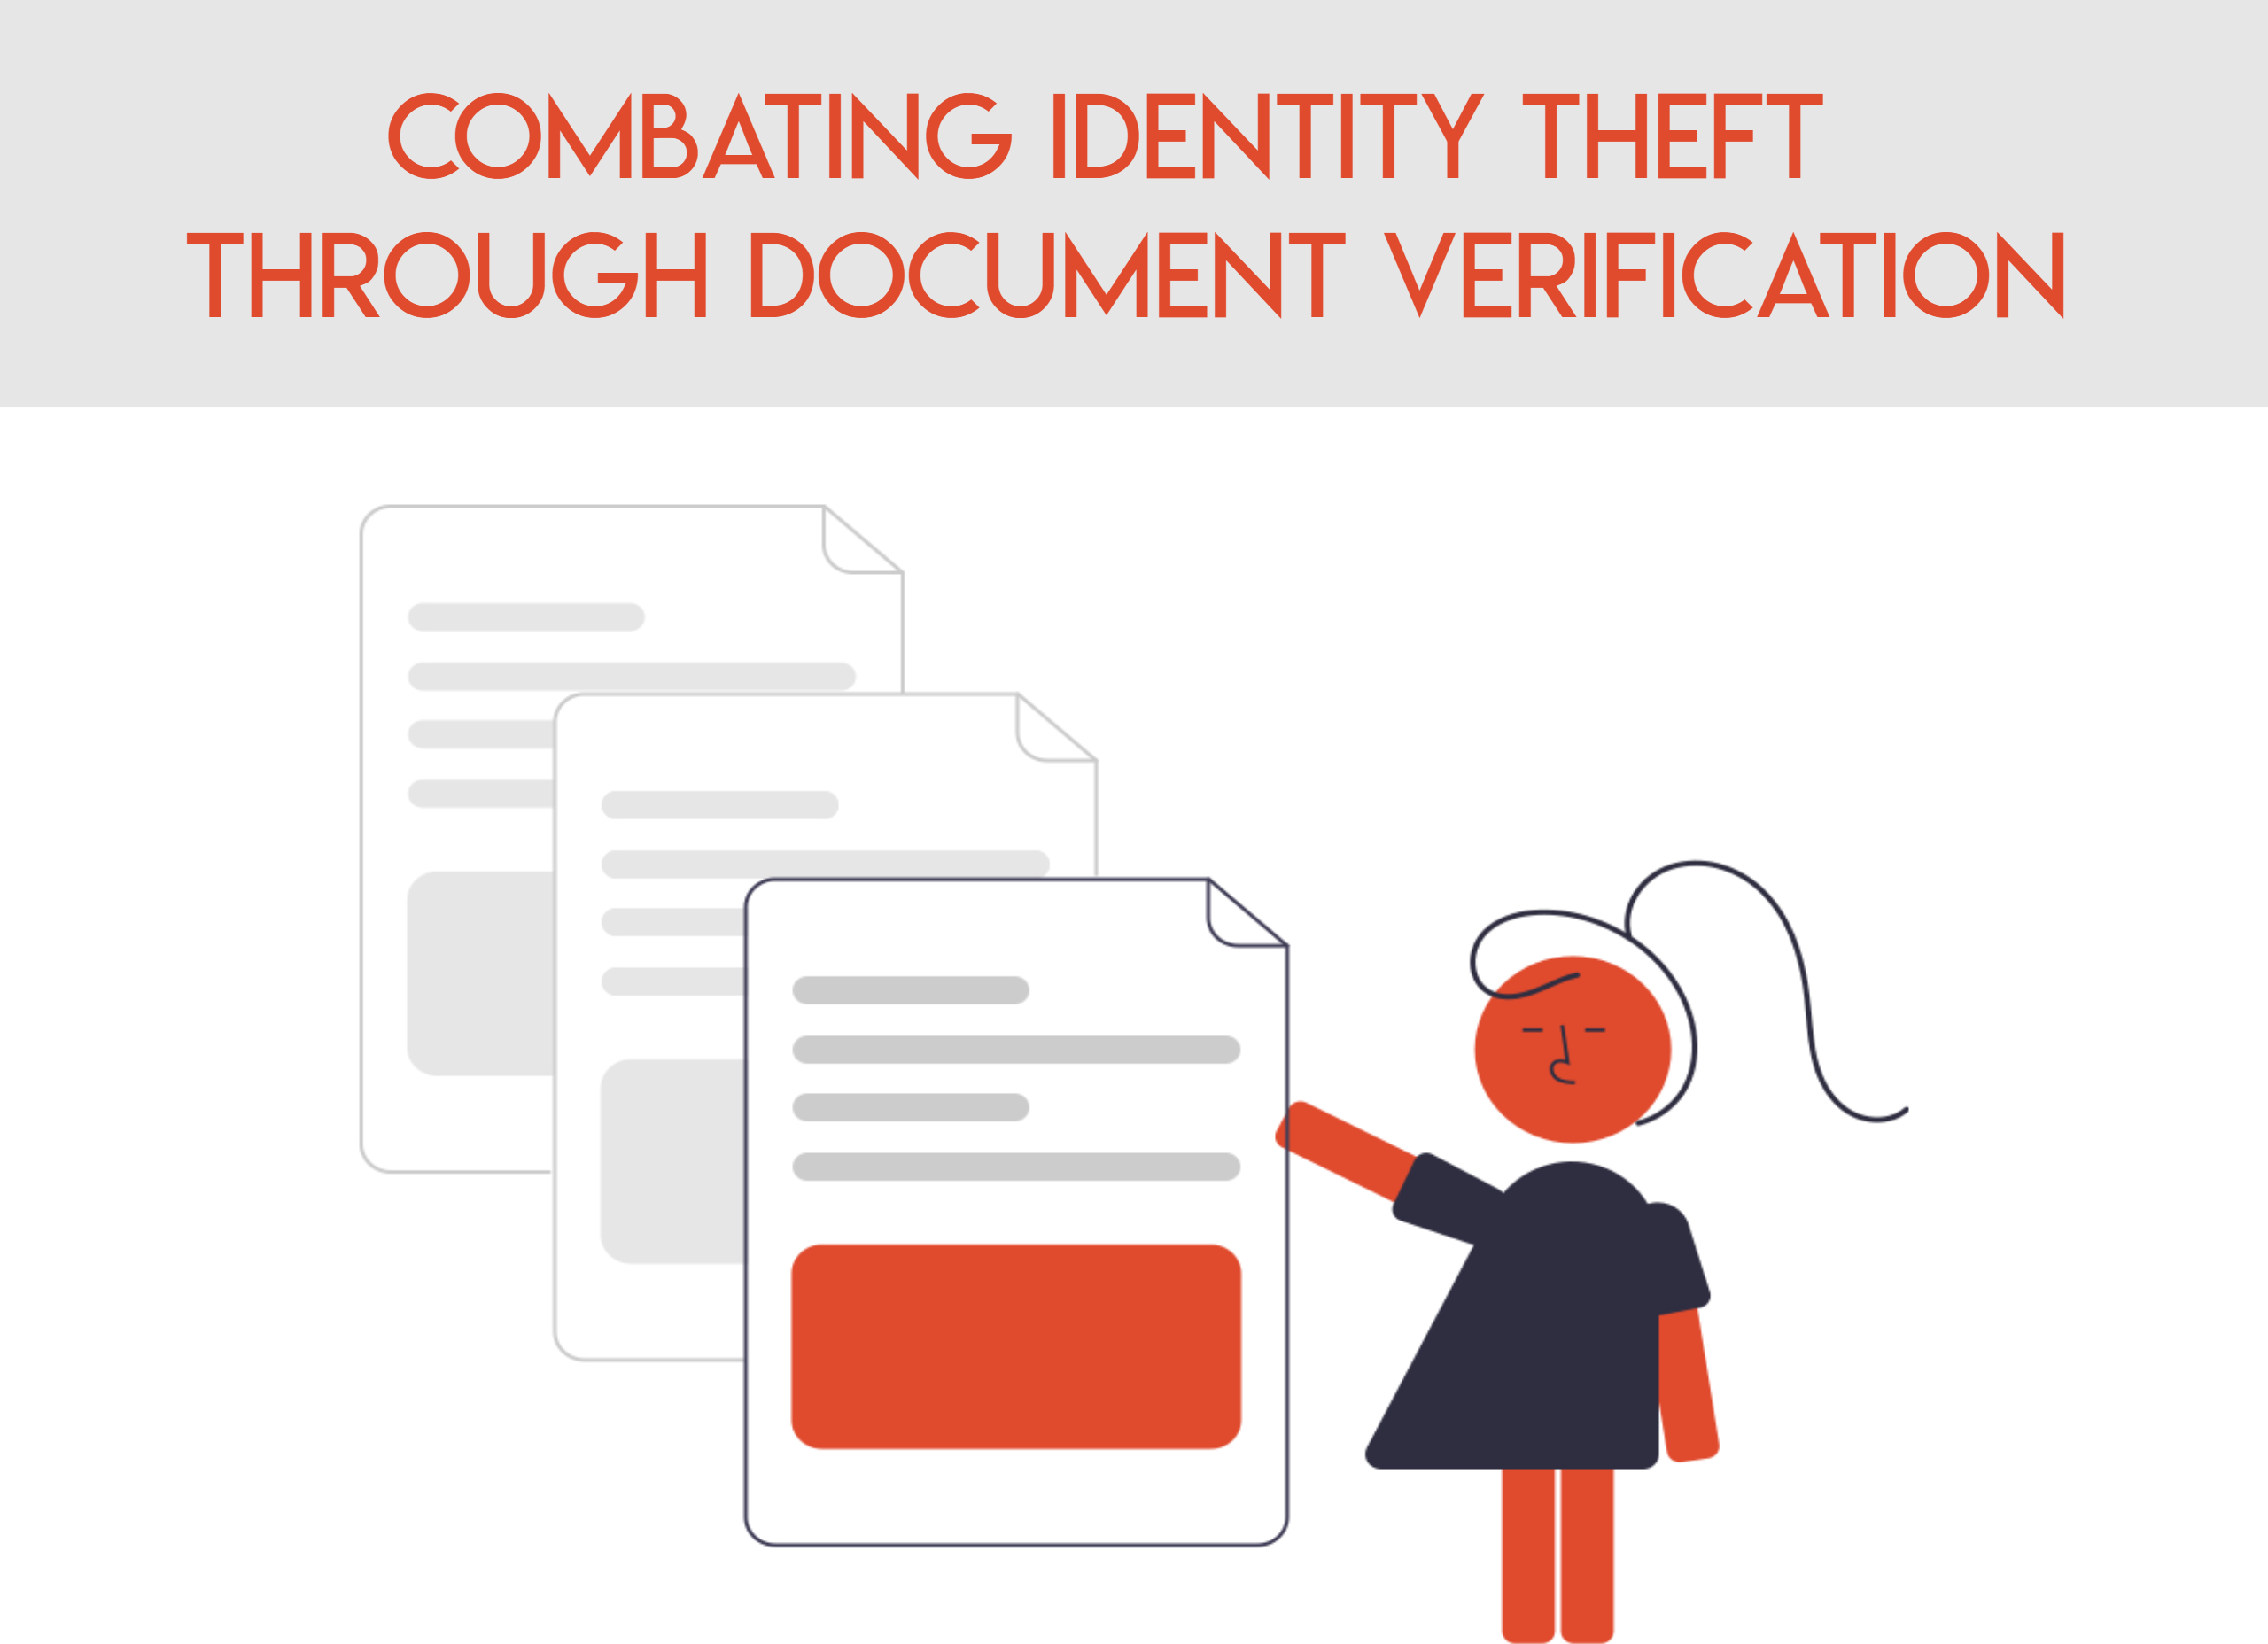 Combating Identity Theft Through Document Verification